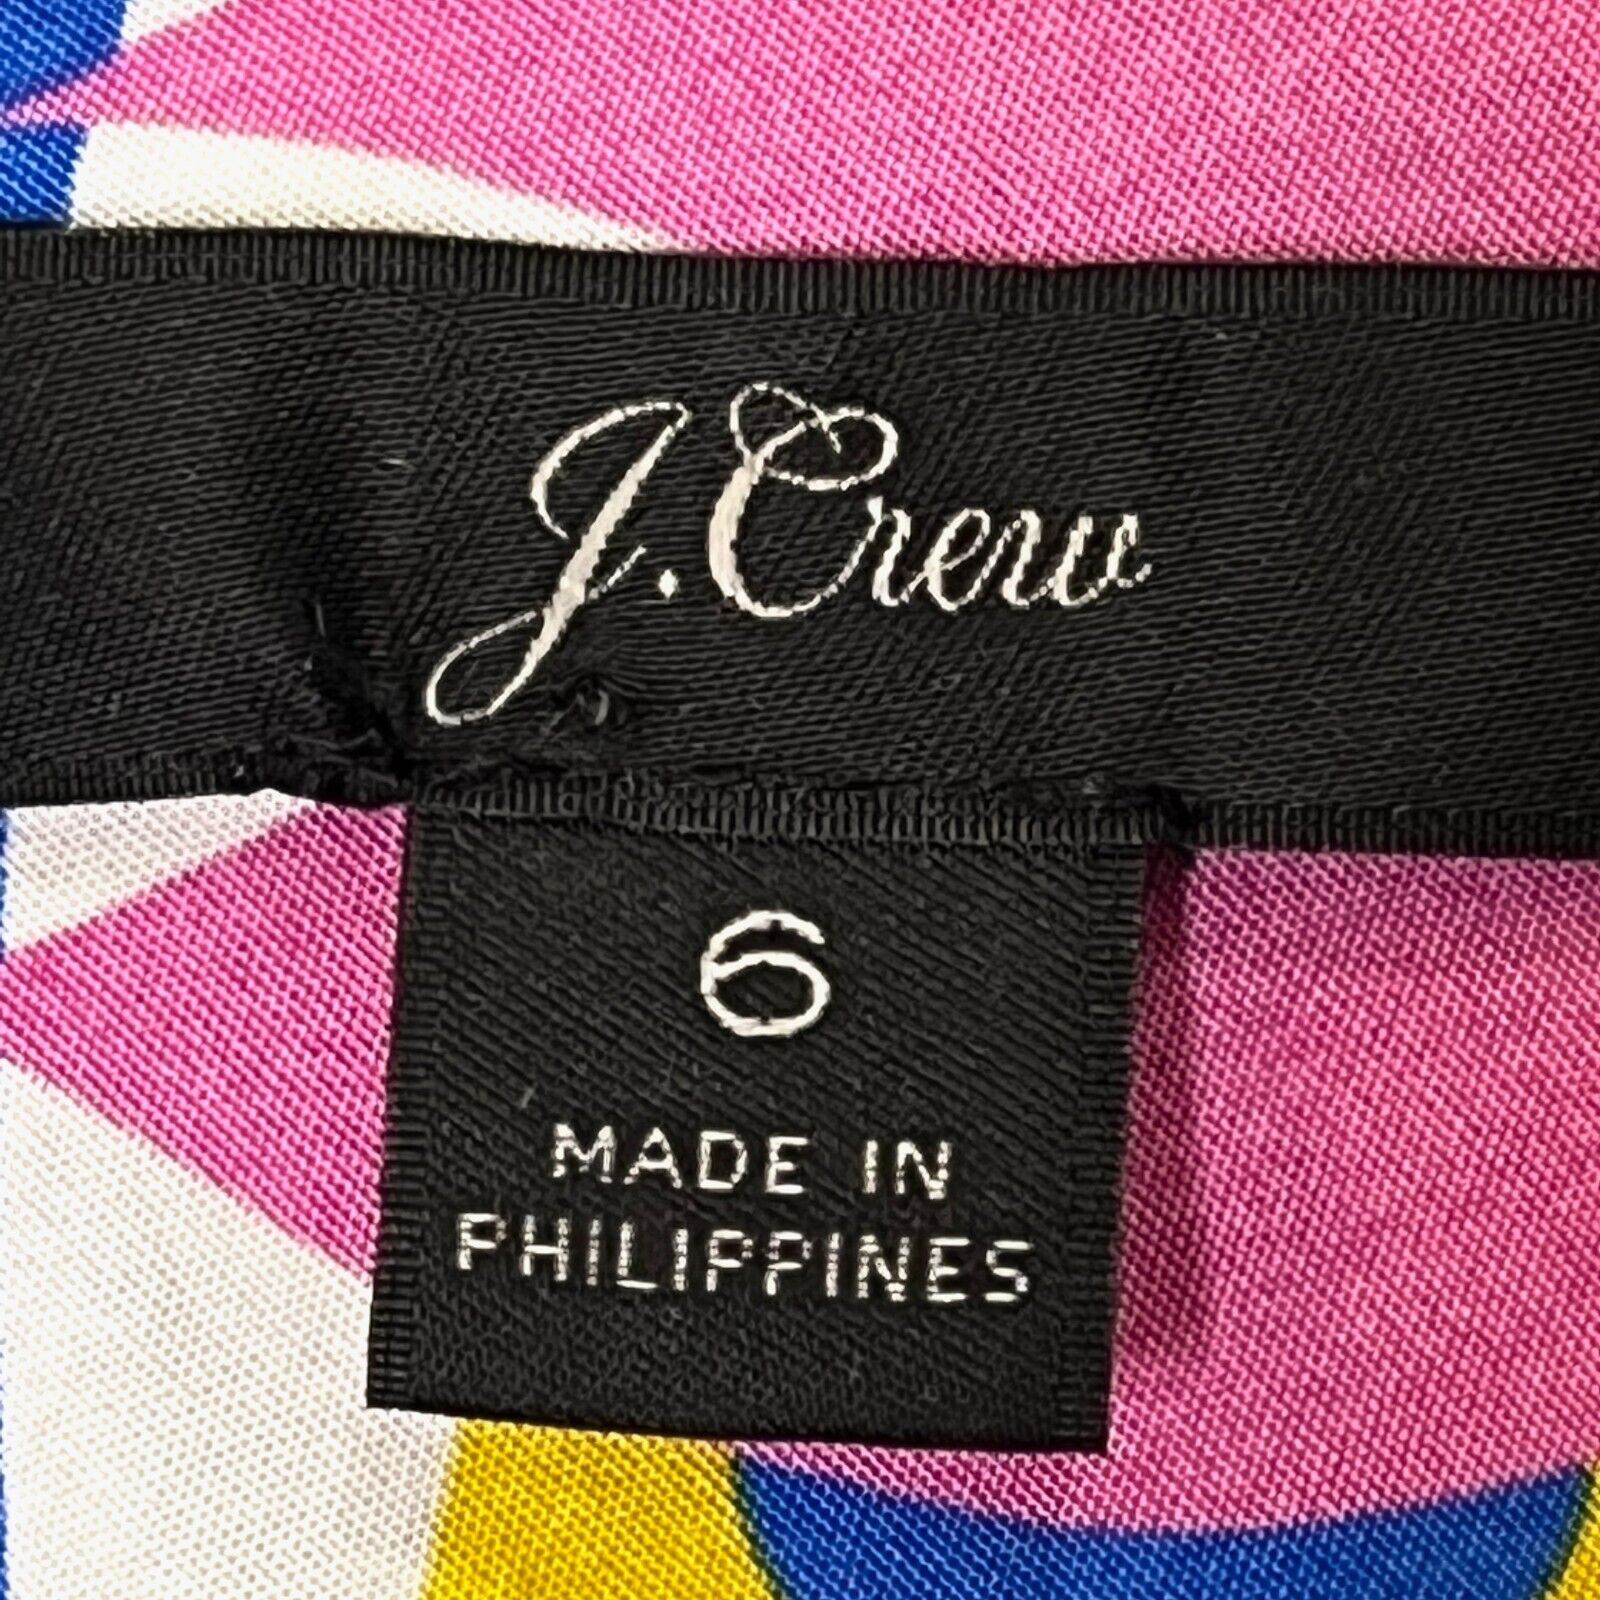 J. Crew Ratti Kaleidoscope Floral Button Down Shirt Top Size 6